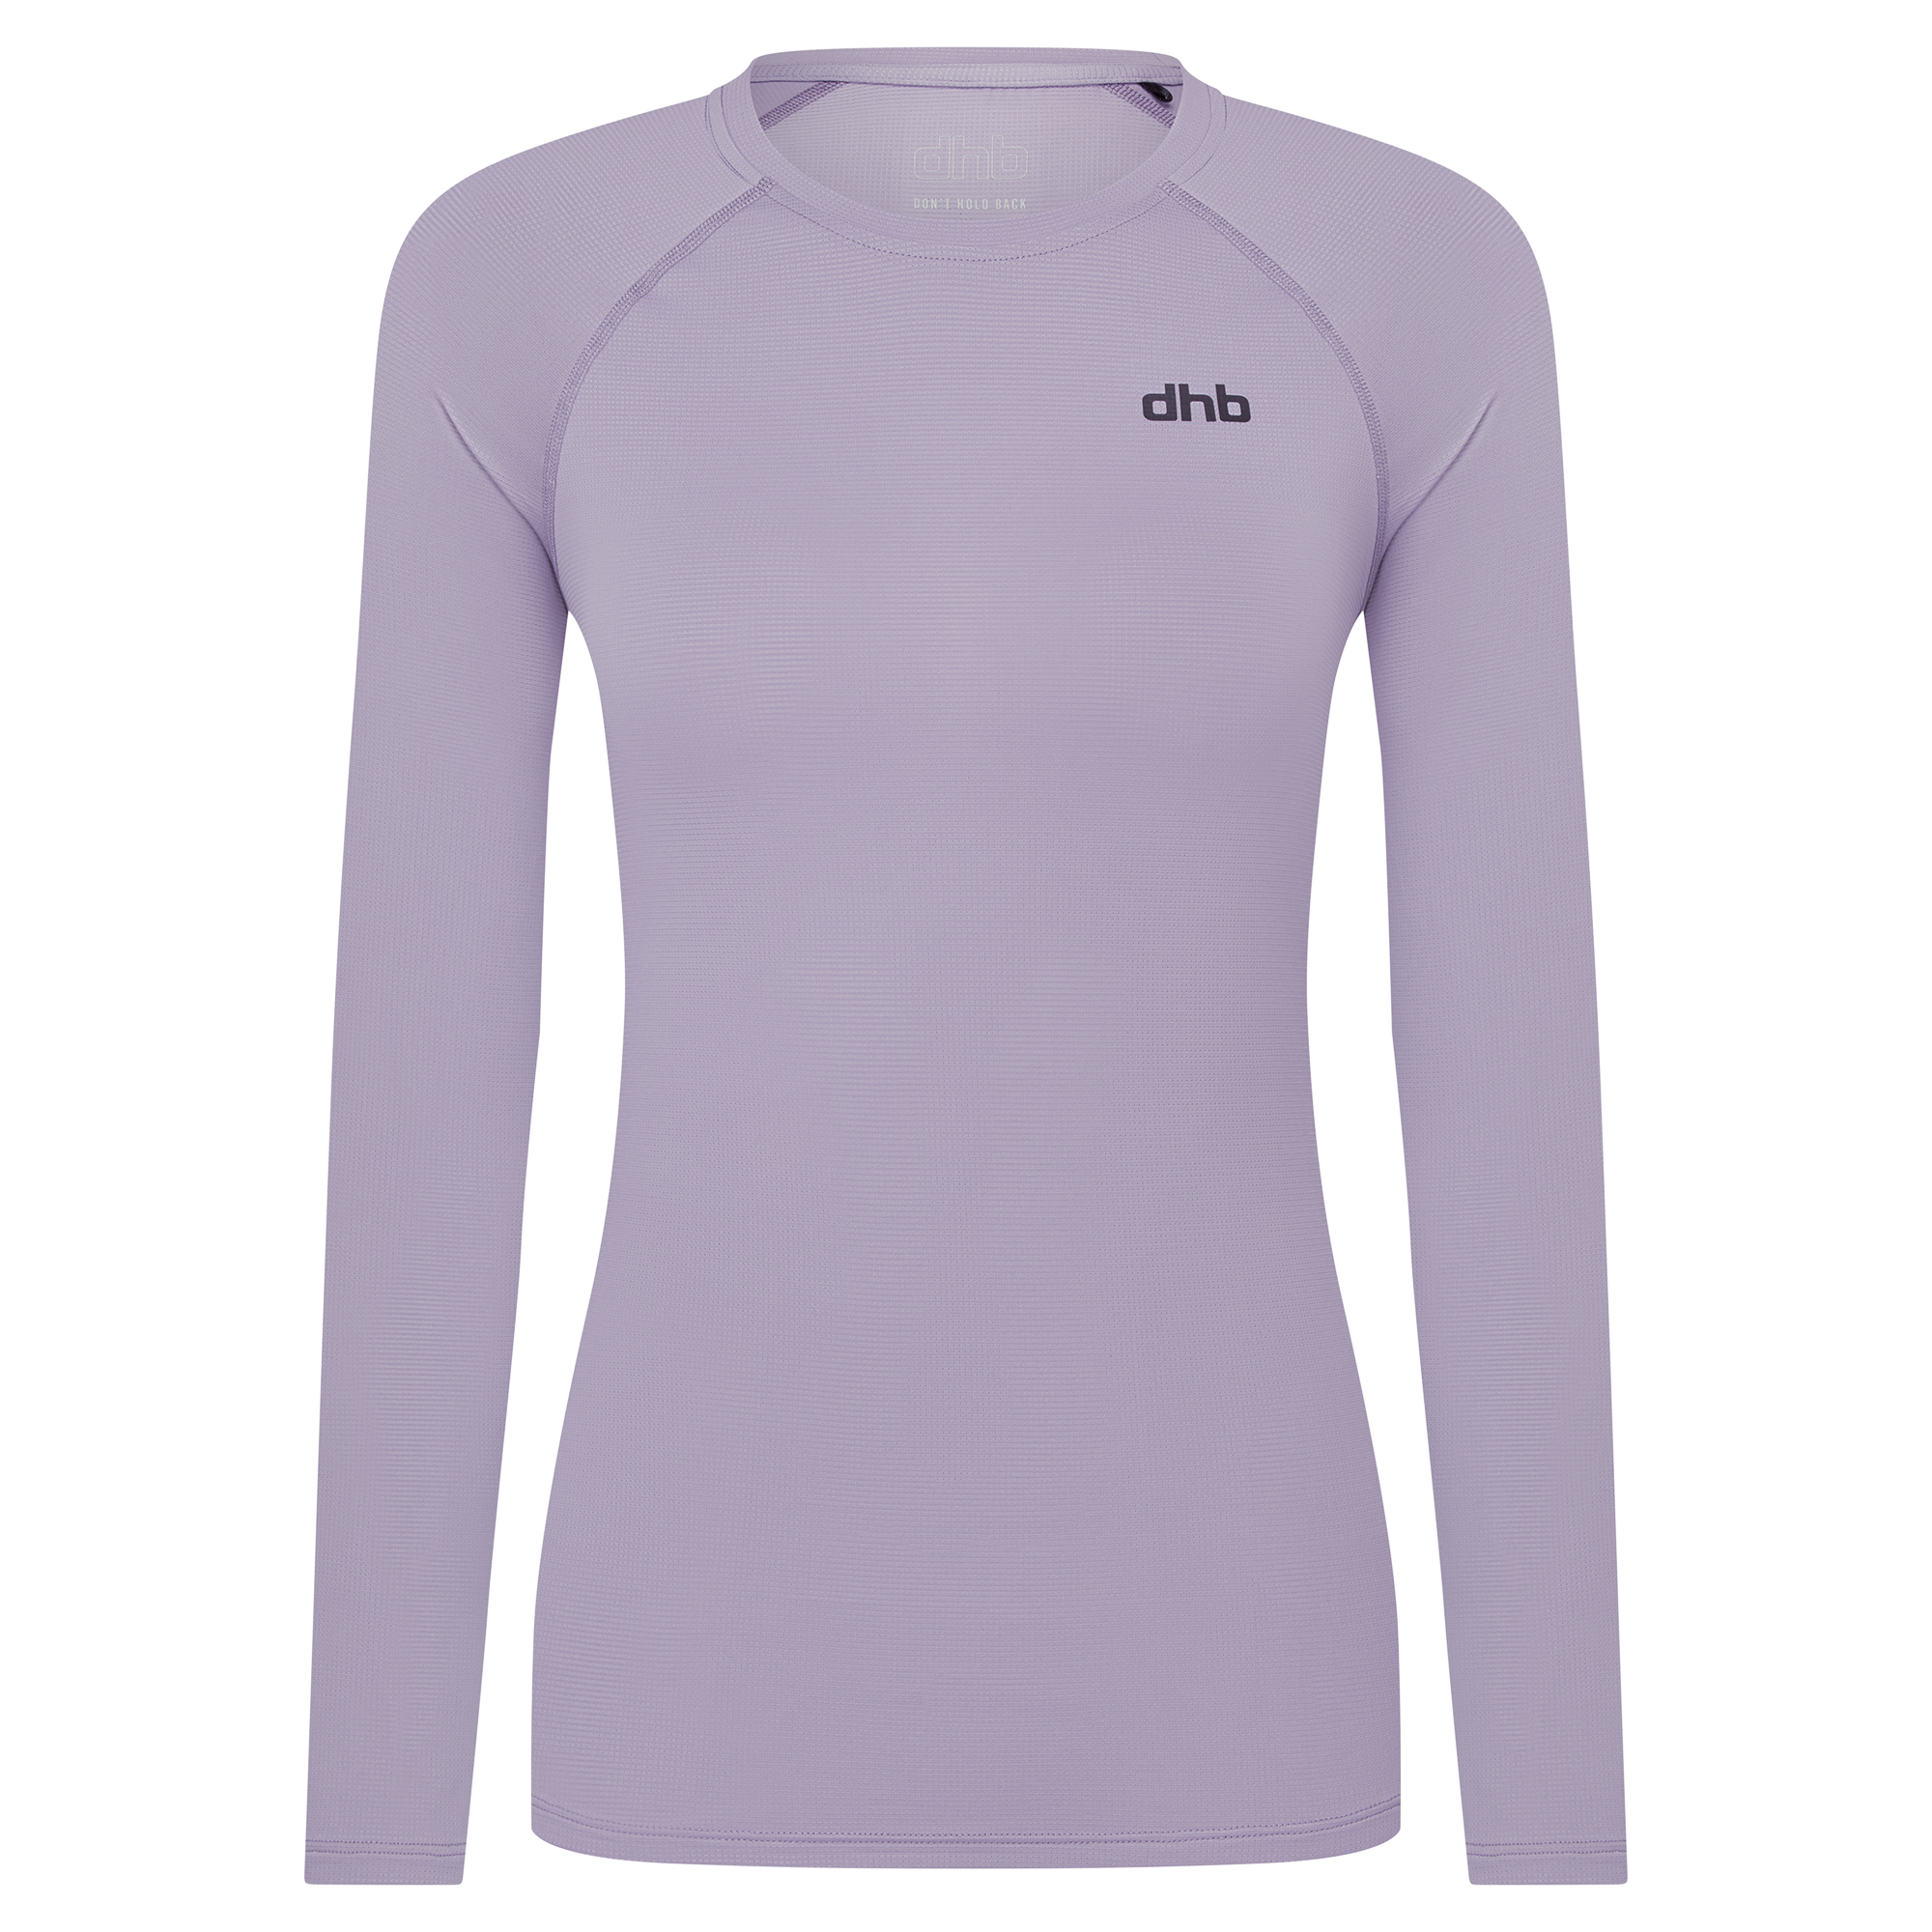 Dhb Aeron Womens Long Sleeve Run Top 2.0 - Lavender Gray